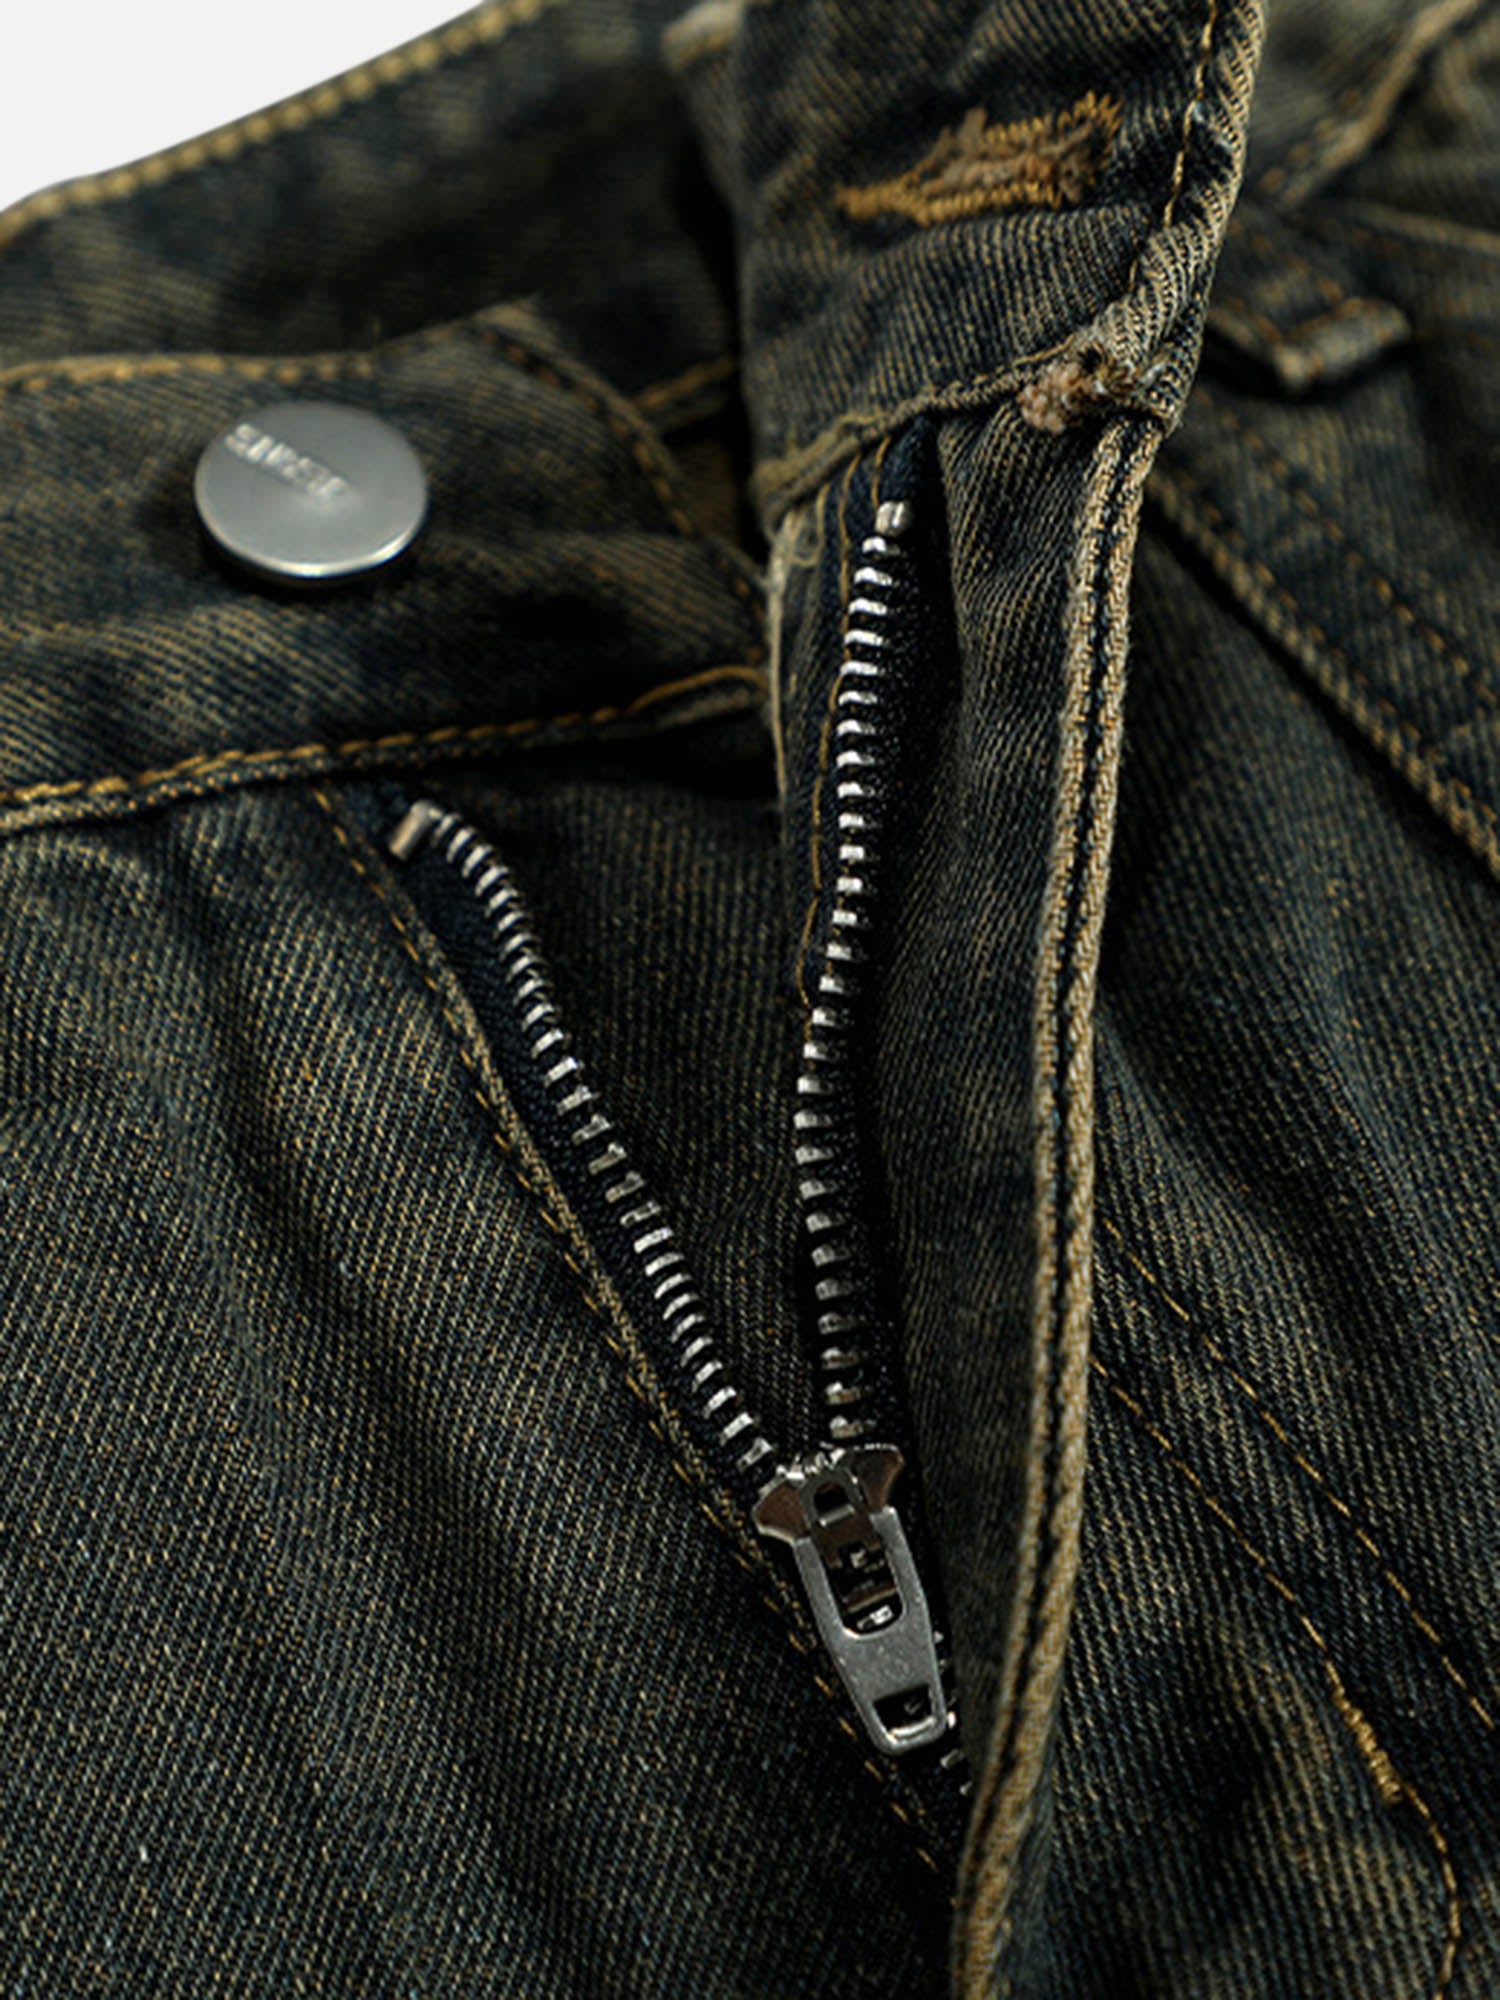 American Retro Multi-pocket Workwear Washed Jeans